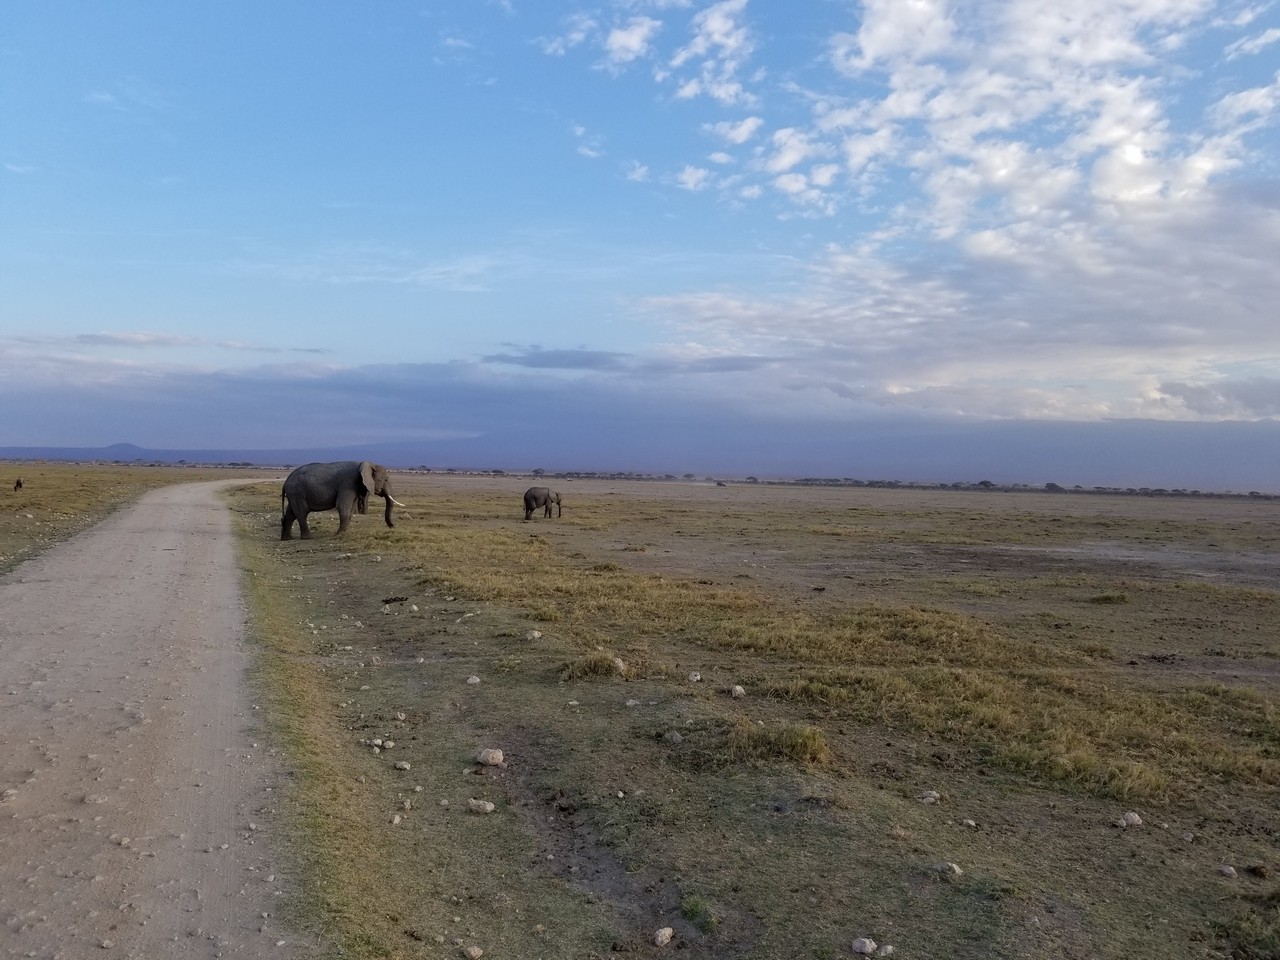 elephants on a dirt road